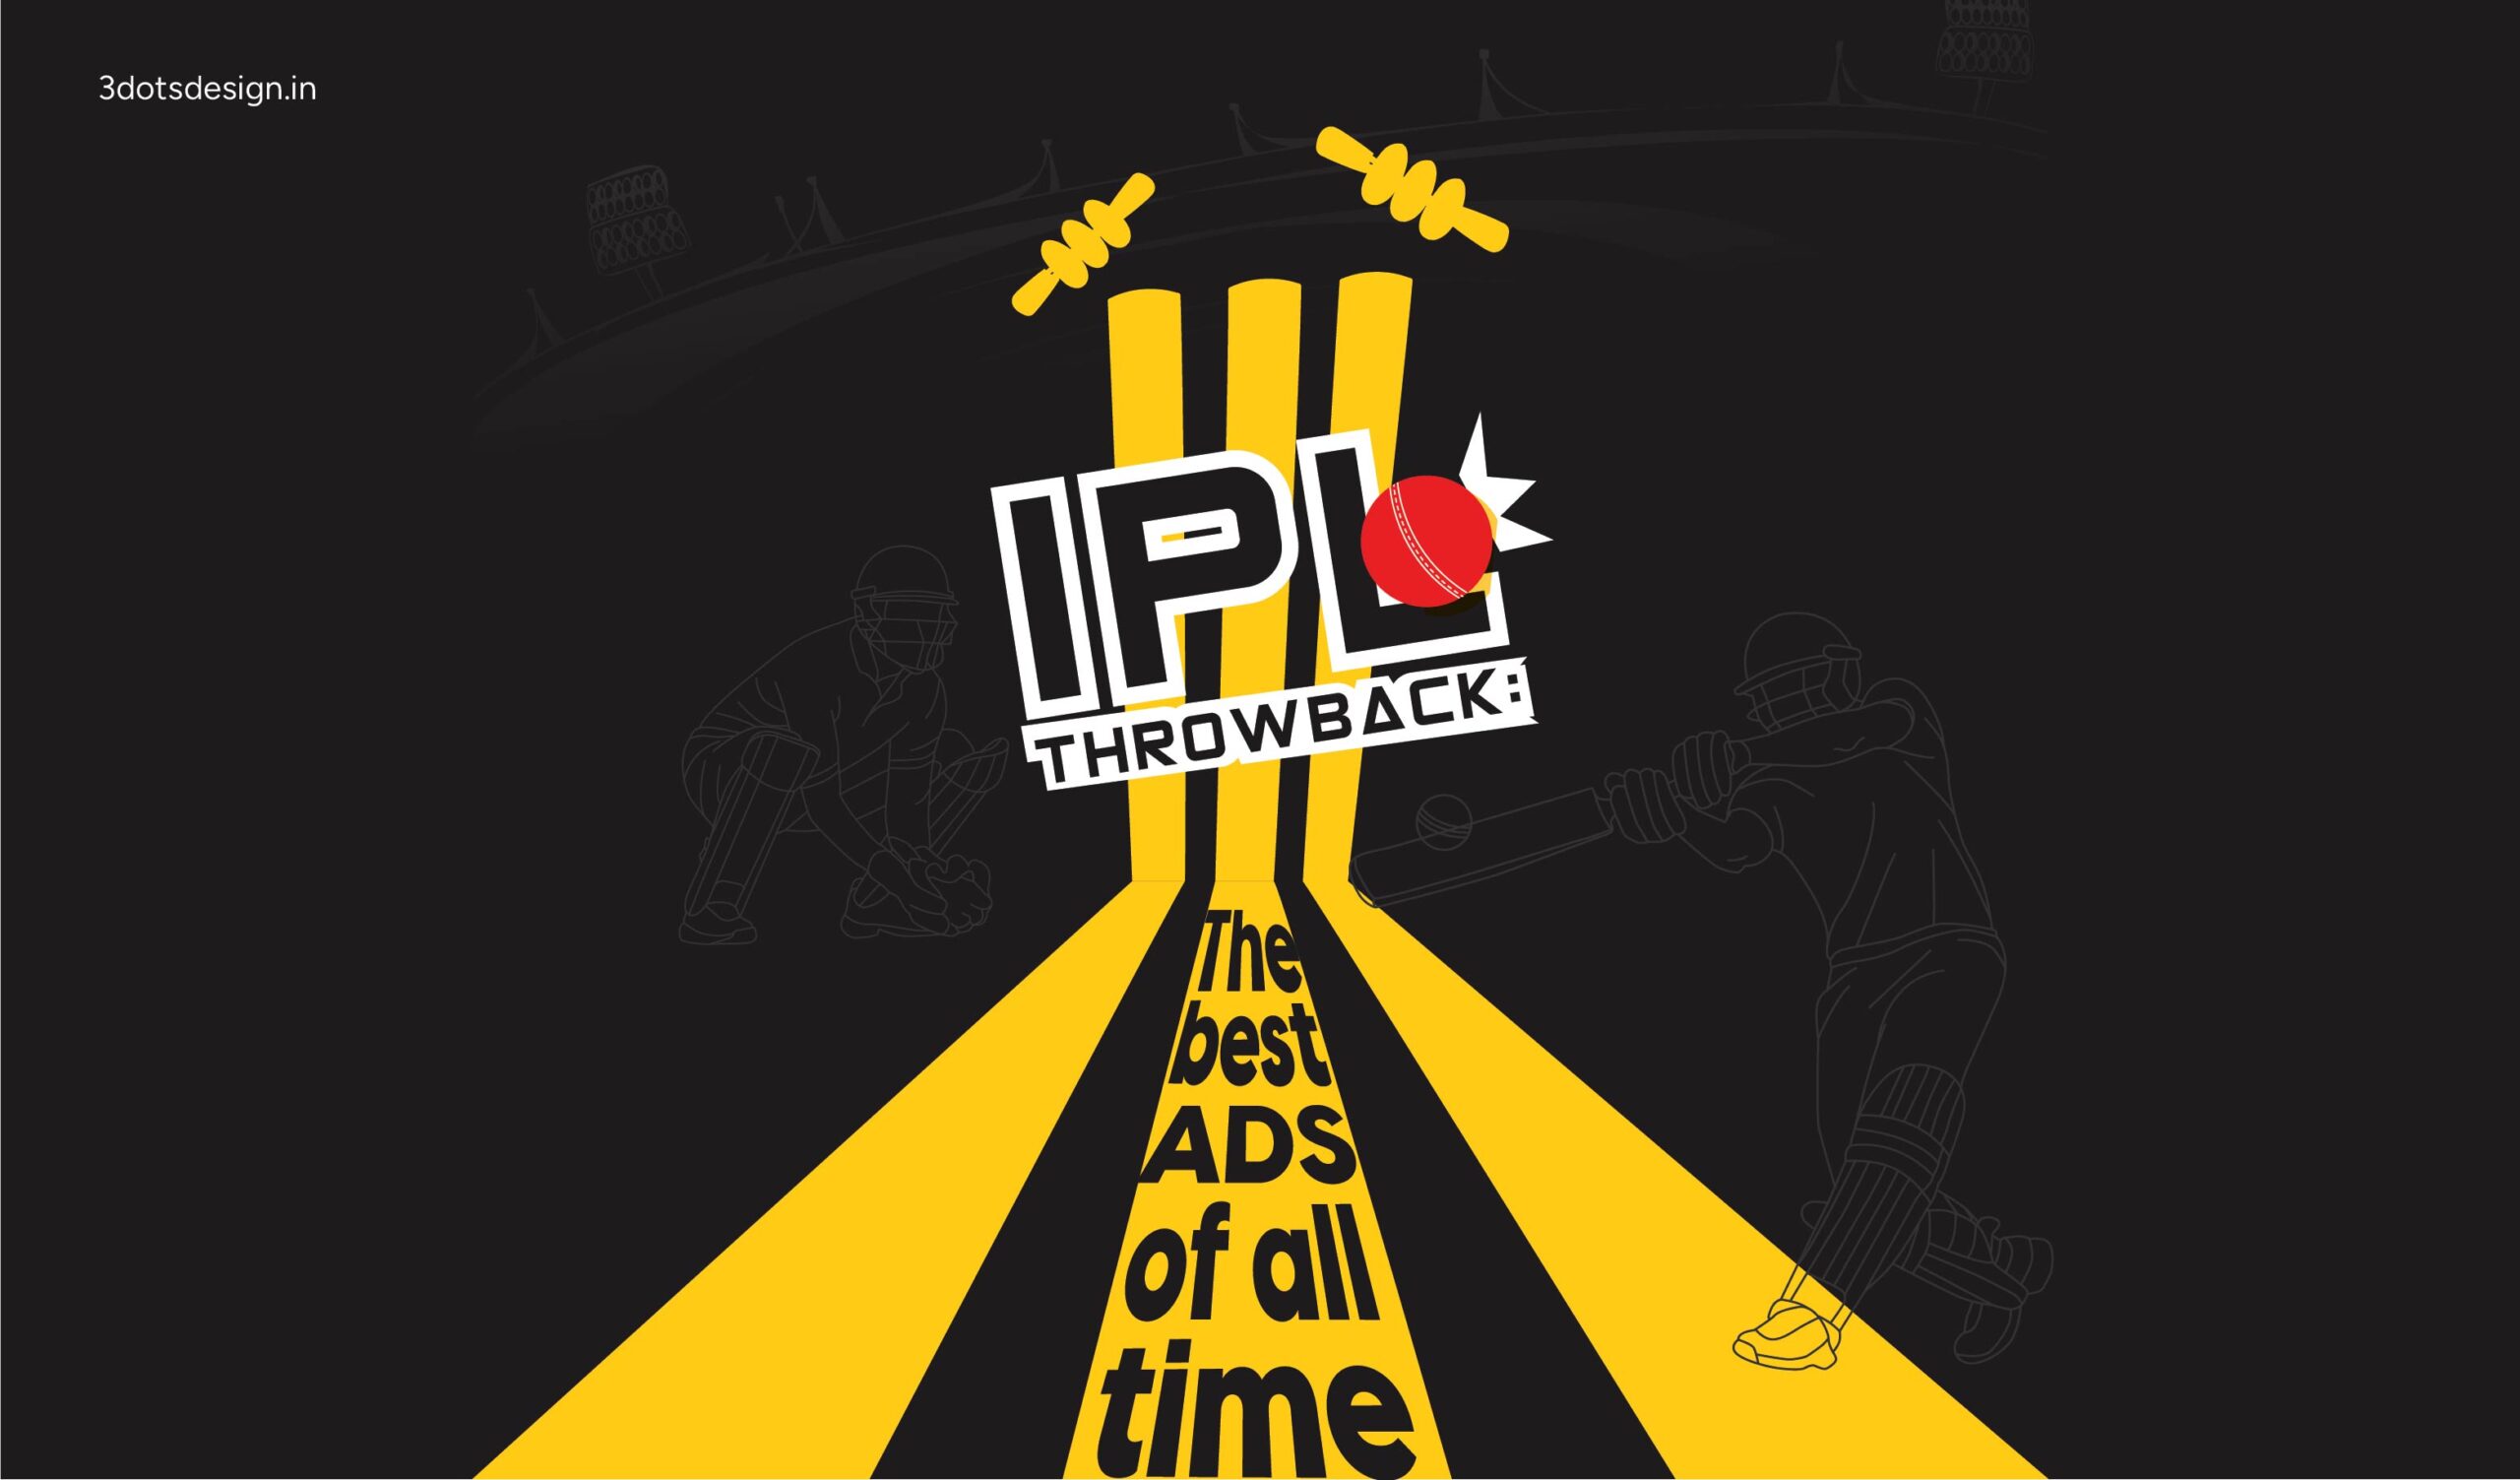 IPL THROWBACK: THE BEST ADS OF ALL TIME - 3 Dots Design Pvt. Ltd. | Blog